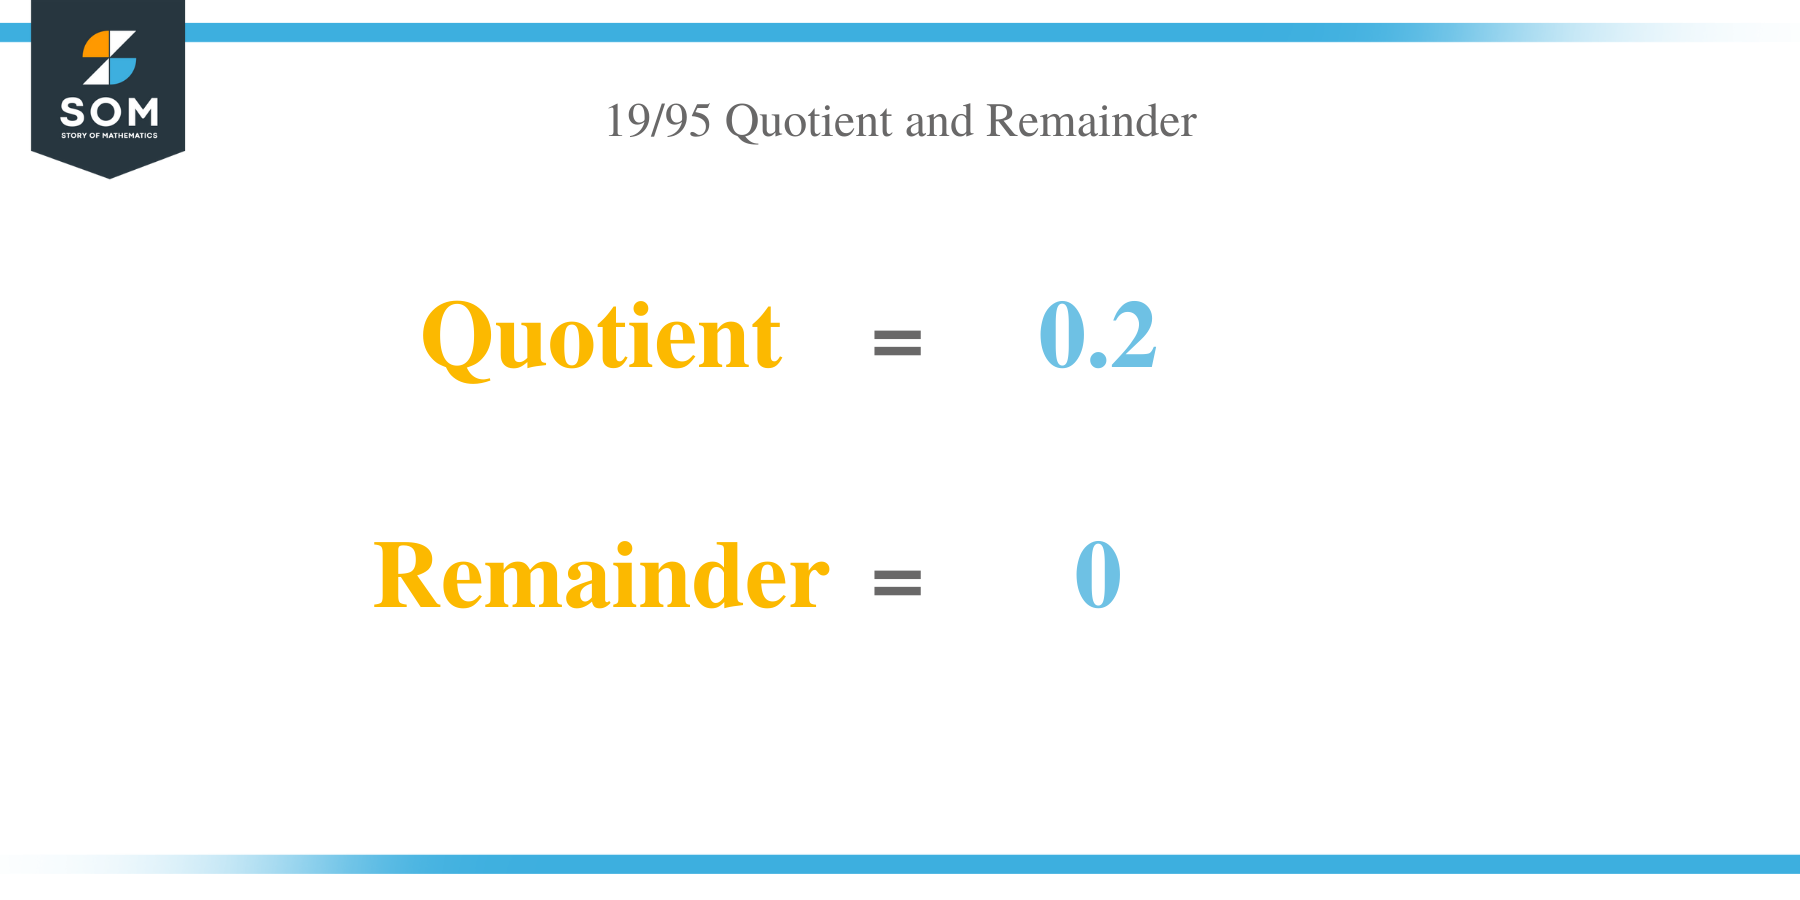 Quotient and Remainder of 19 per 95